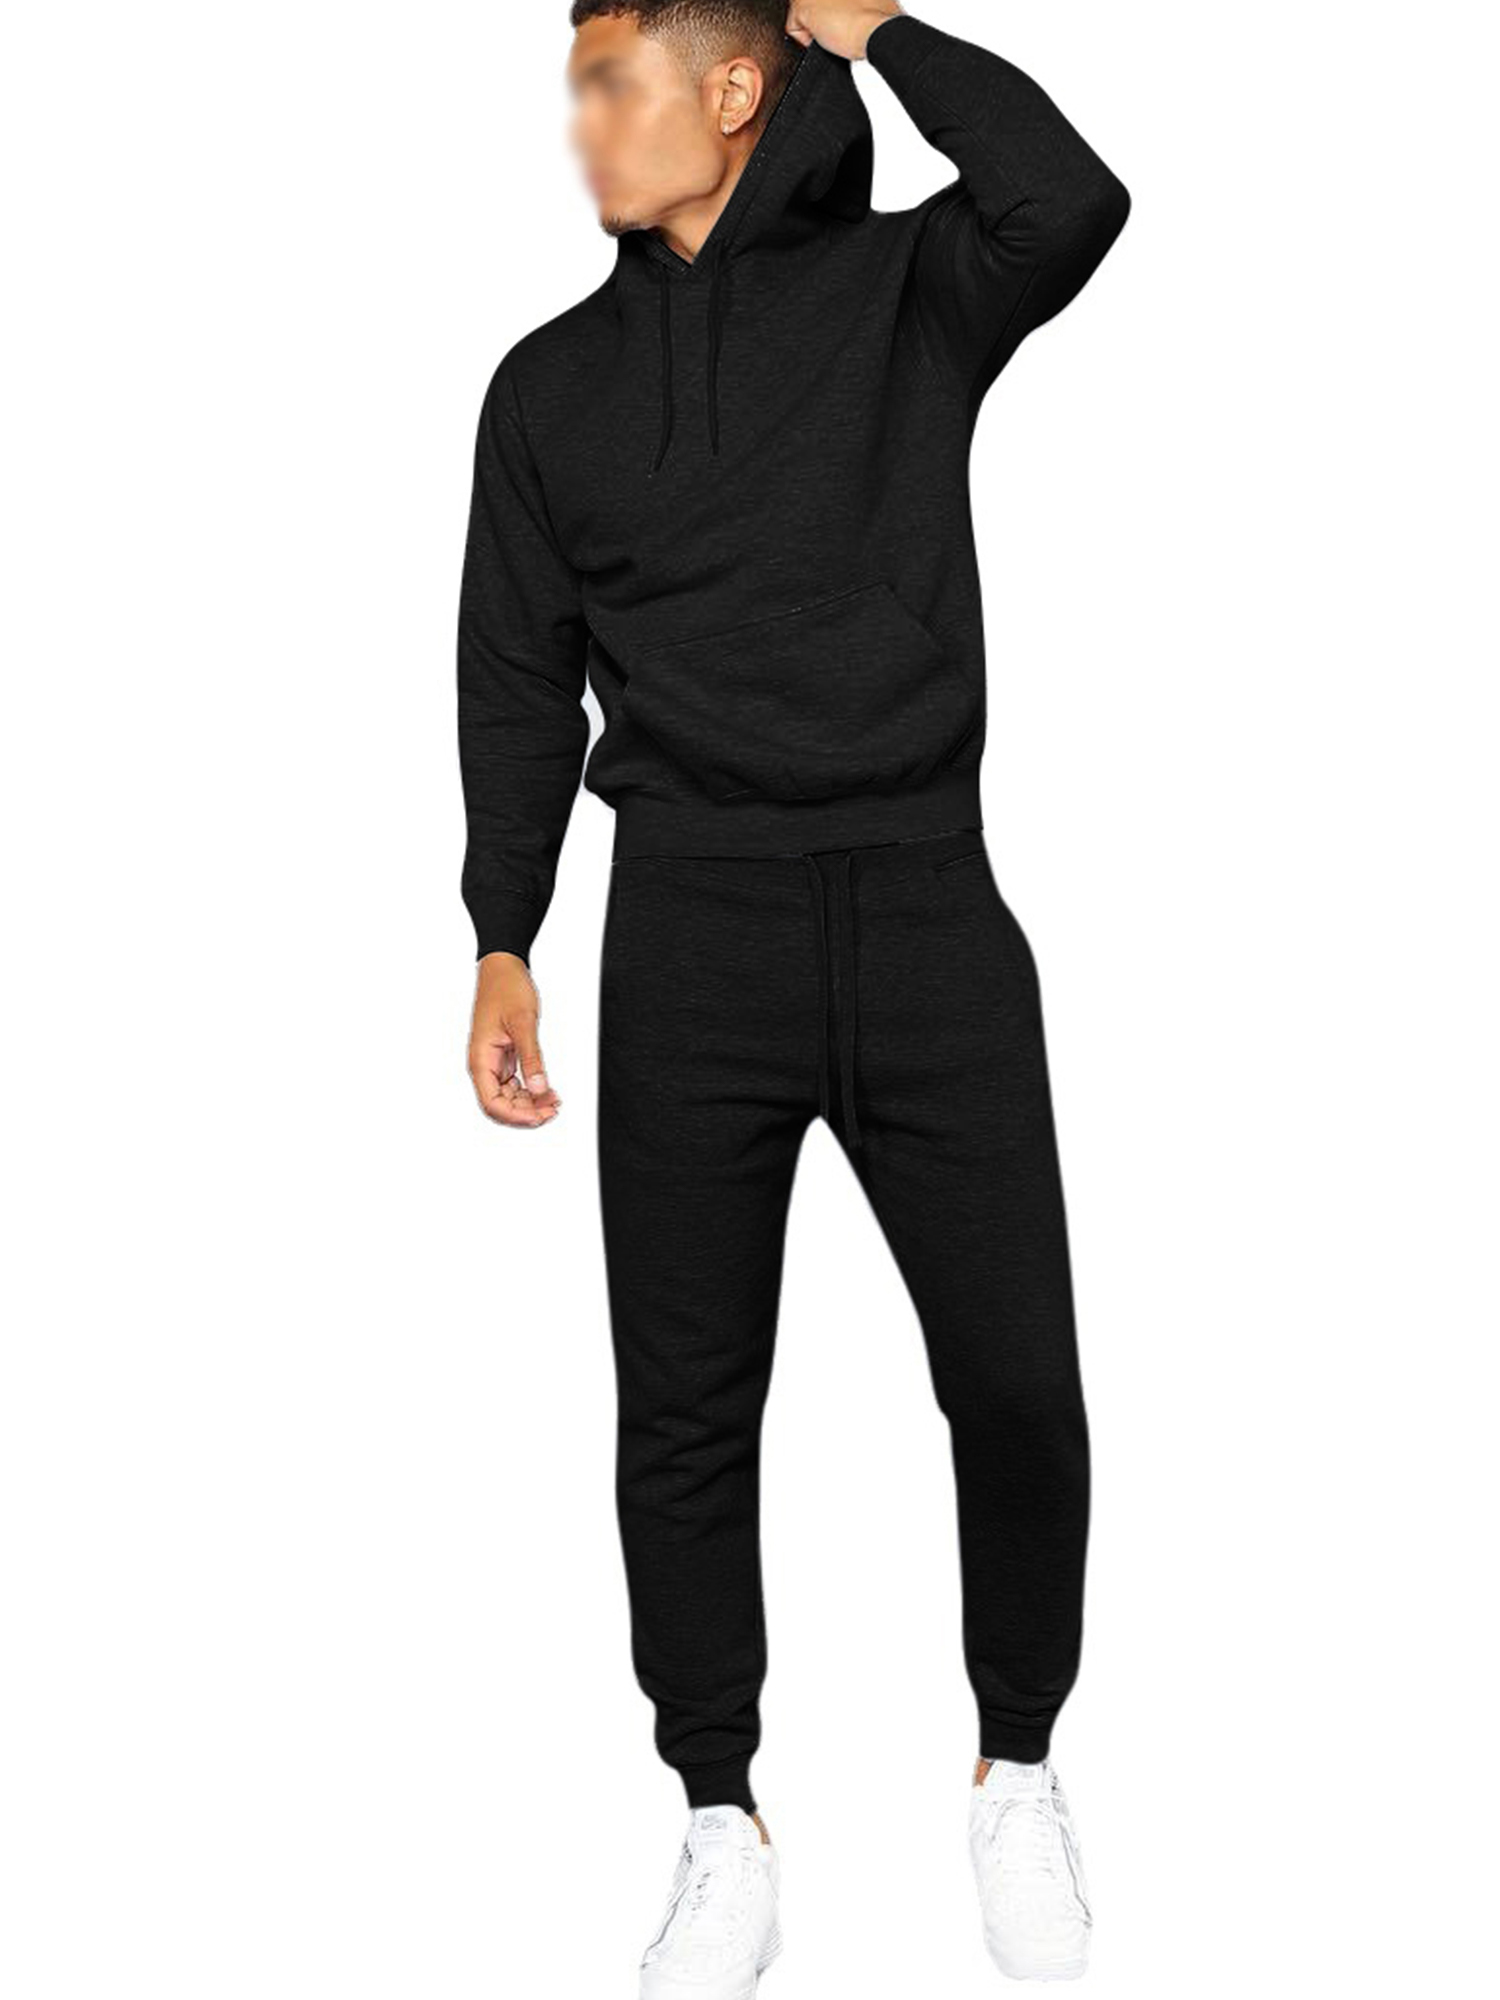 Capreze Men Sweatpants Tracksuit Set Casual Pcs Sweatshirts+Pant Outfits  Gym Loungewear Hooded Hoodies Sweatsuit Black S